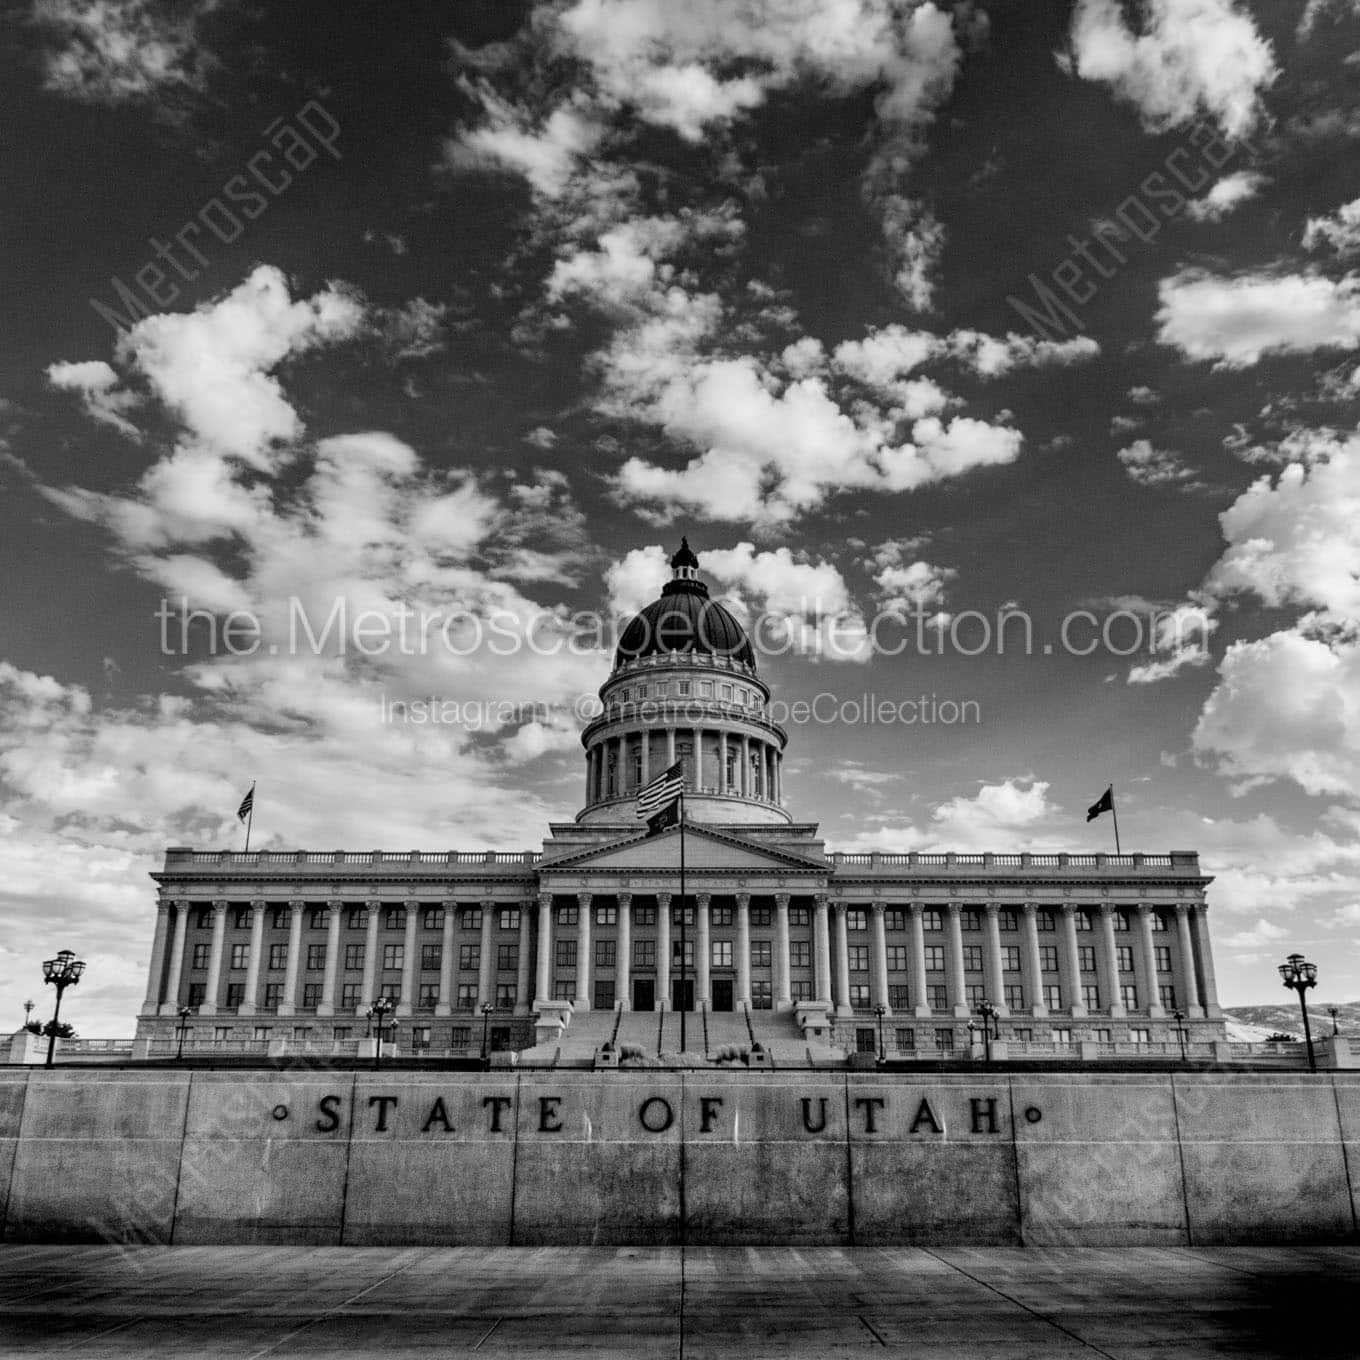 utah state capitol building Black & White Wall Art